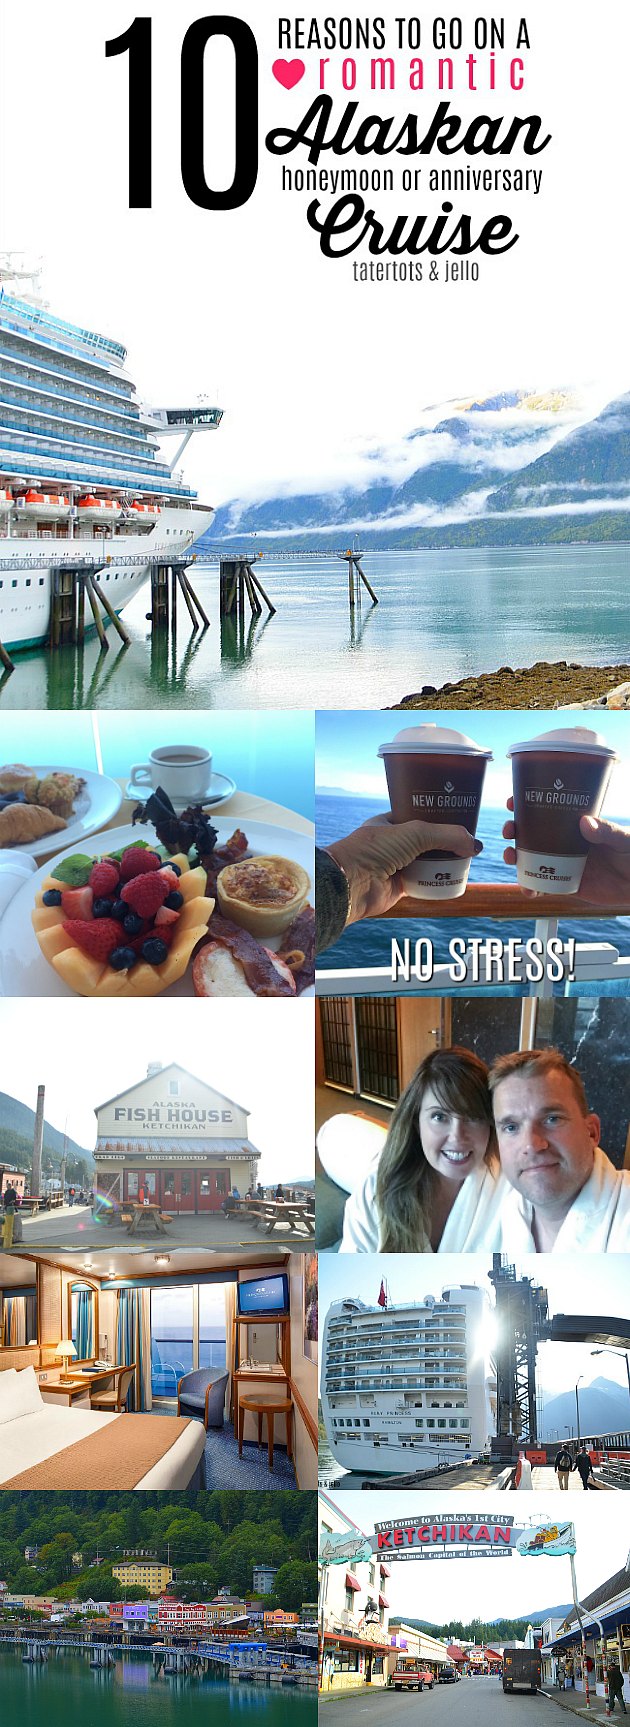 10 reasons to go on an alaskan honeymoon cruise! 